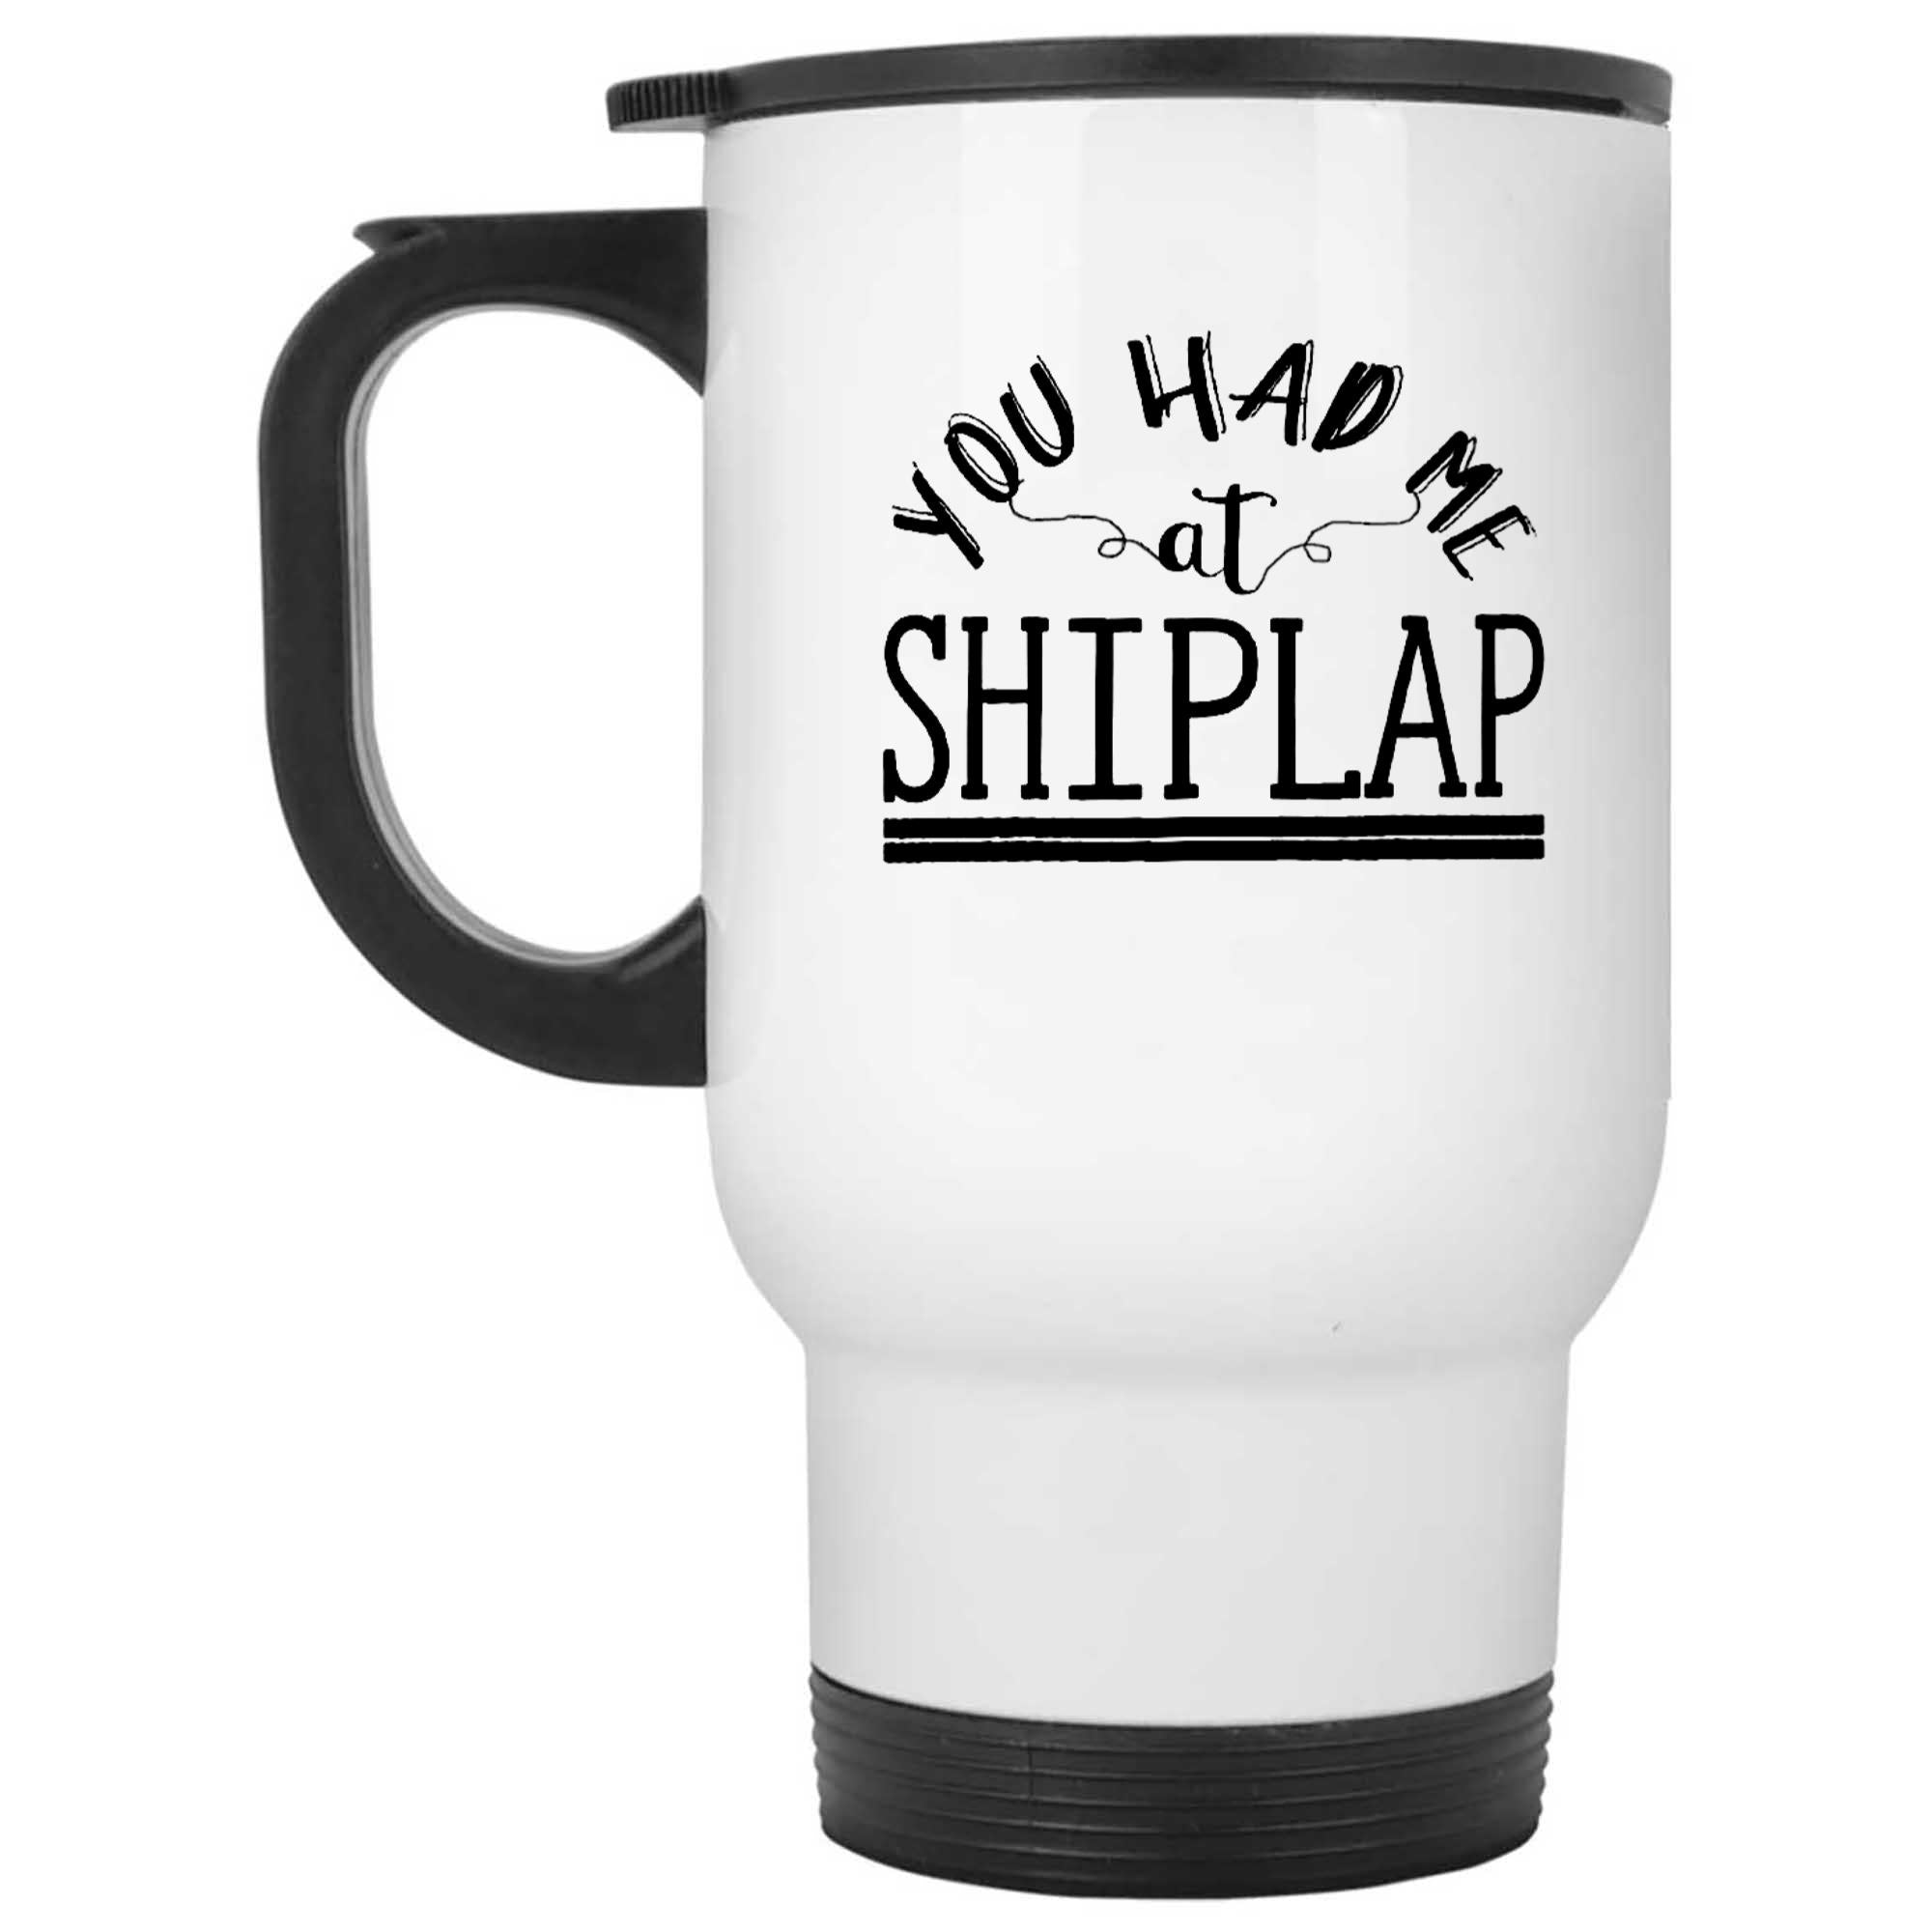 Skitongifts Funny Ceramic Novelty Coffee Mug You Had Me At Shiplap ZIyxkkb